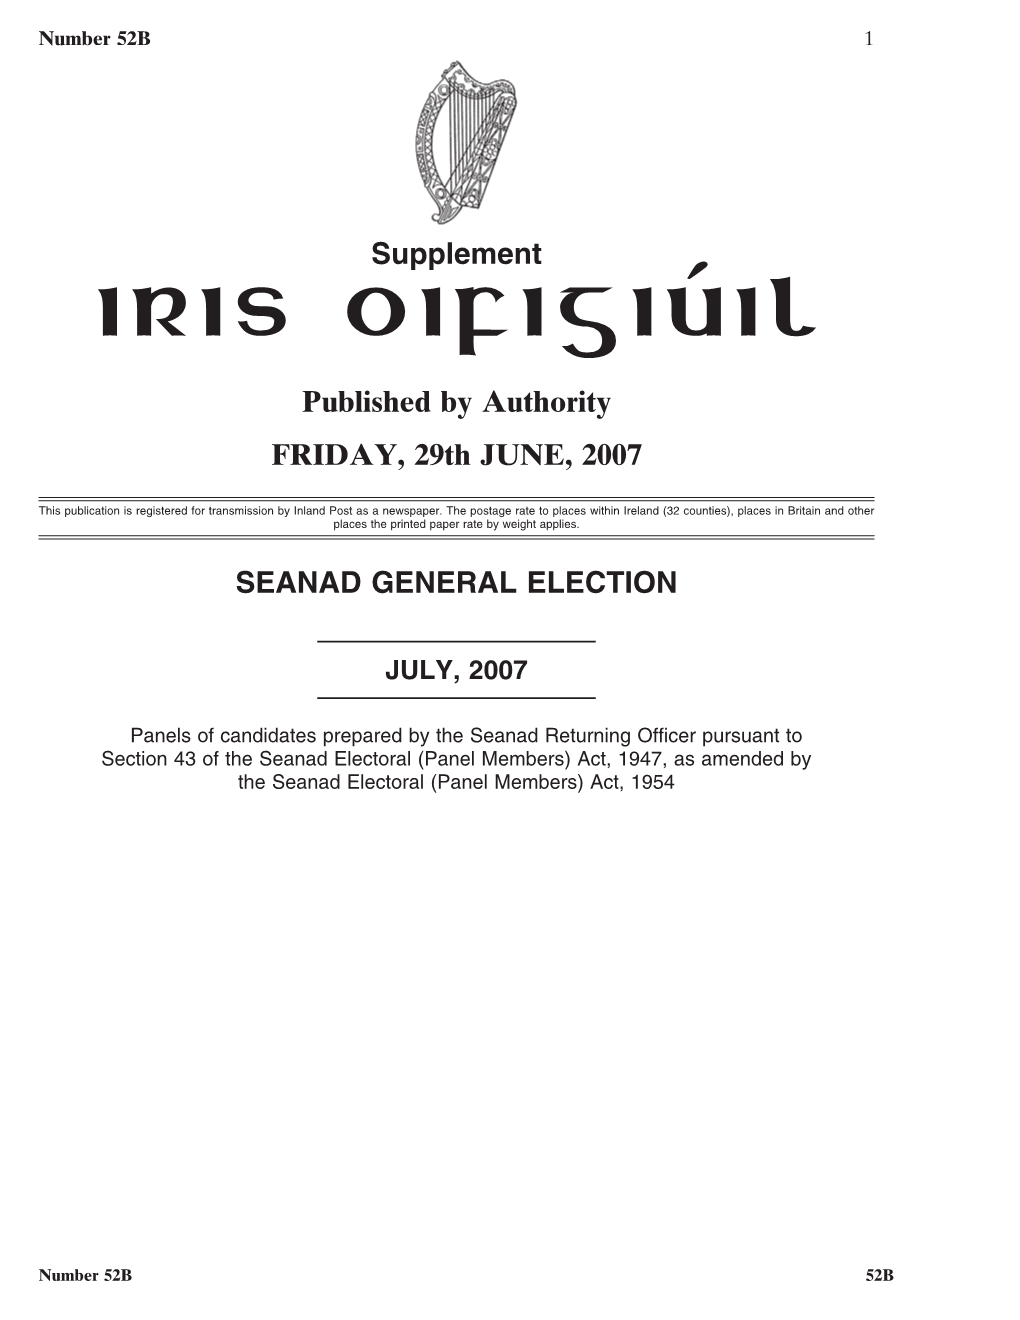 Seanad General Election, July 2007